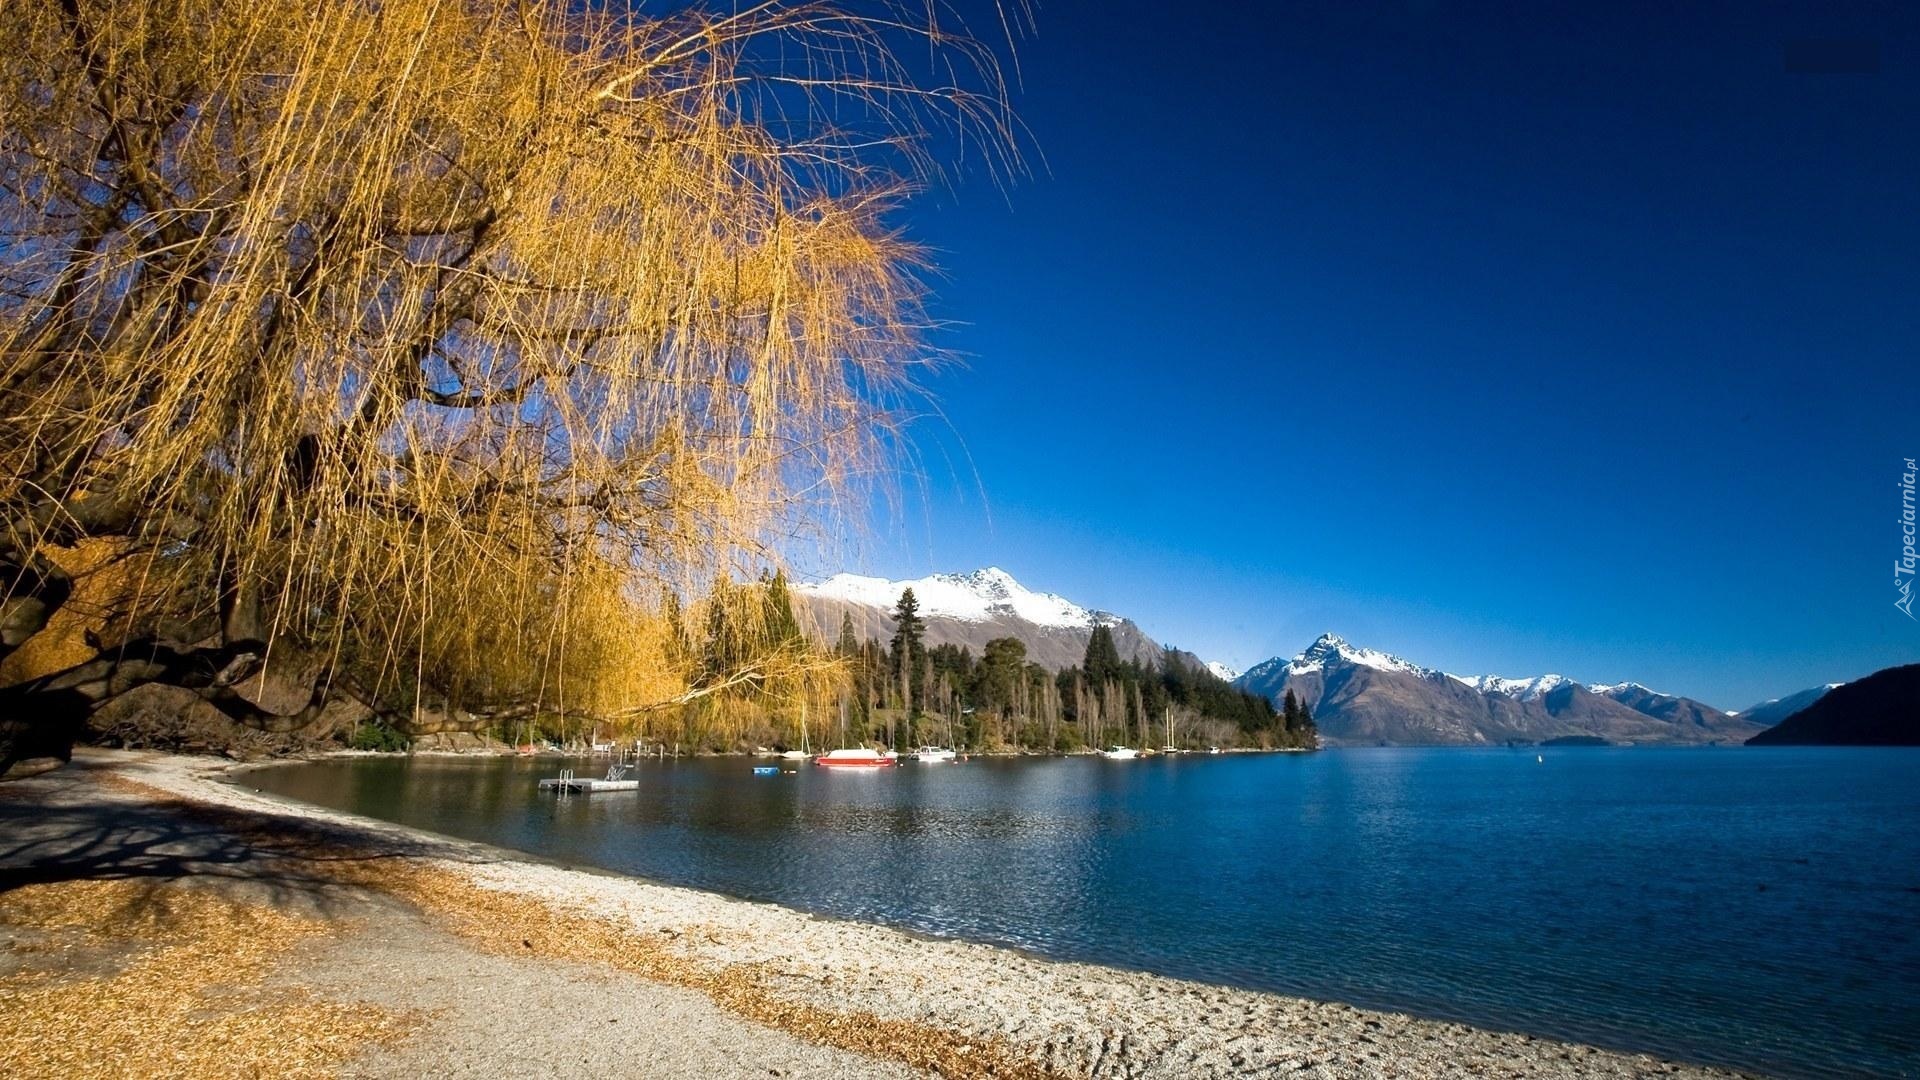 Jezioro, Plaża, Góry, Drzewa, Wakatipu, Nowa Zelandia